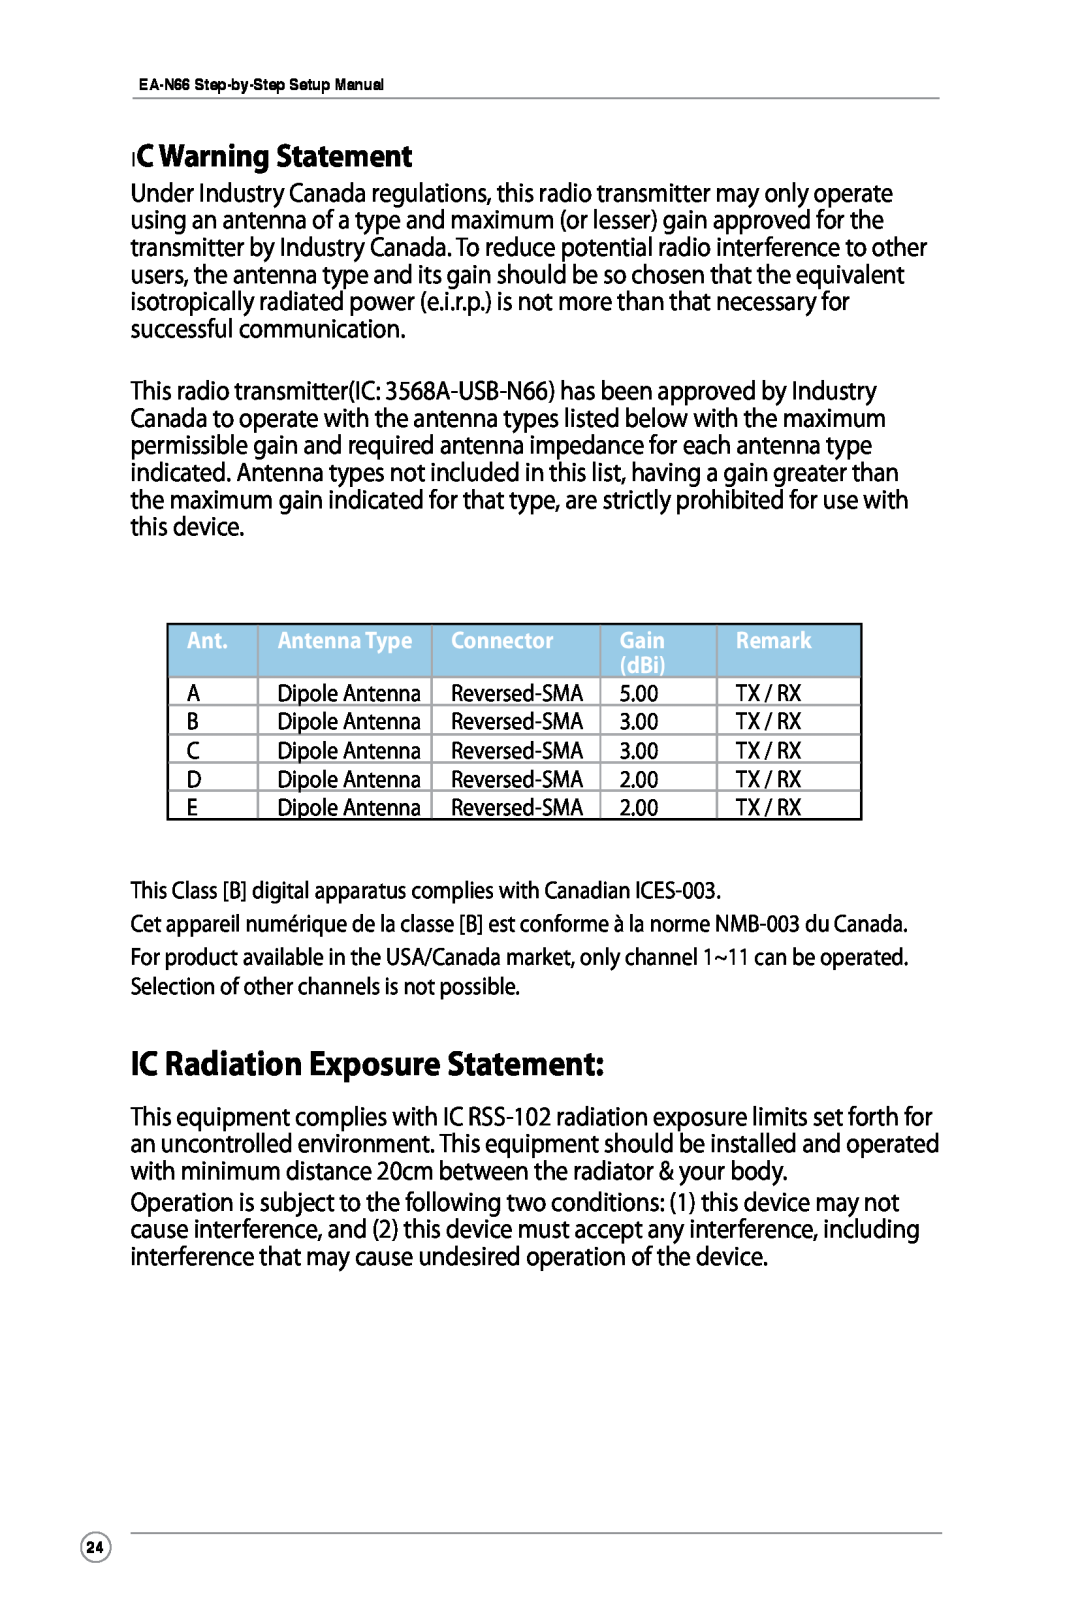 Asus EA-N66 manual IC Radiation Exposure Statement, IC Warning Statement, Connector, Gain, Remark 